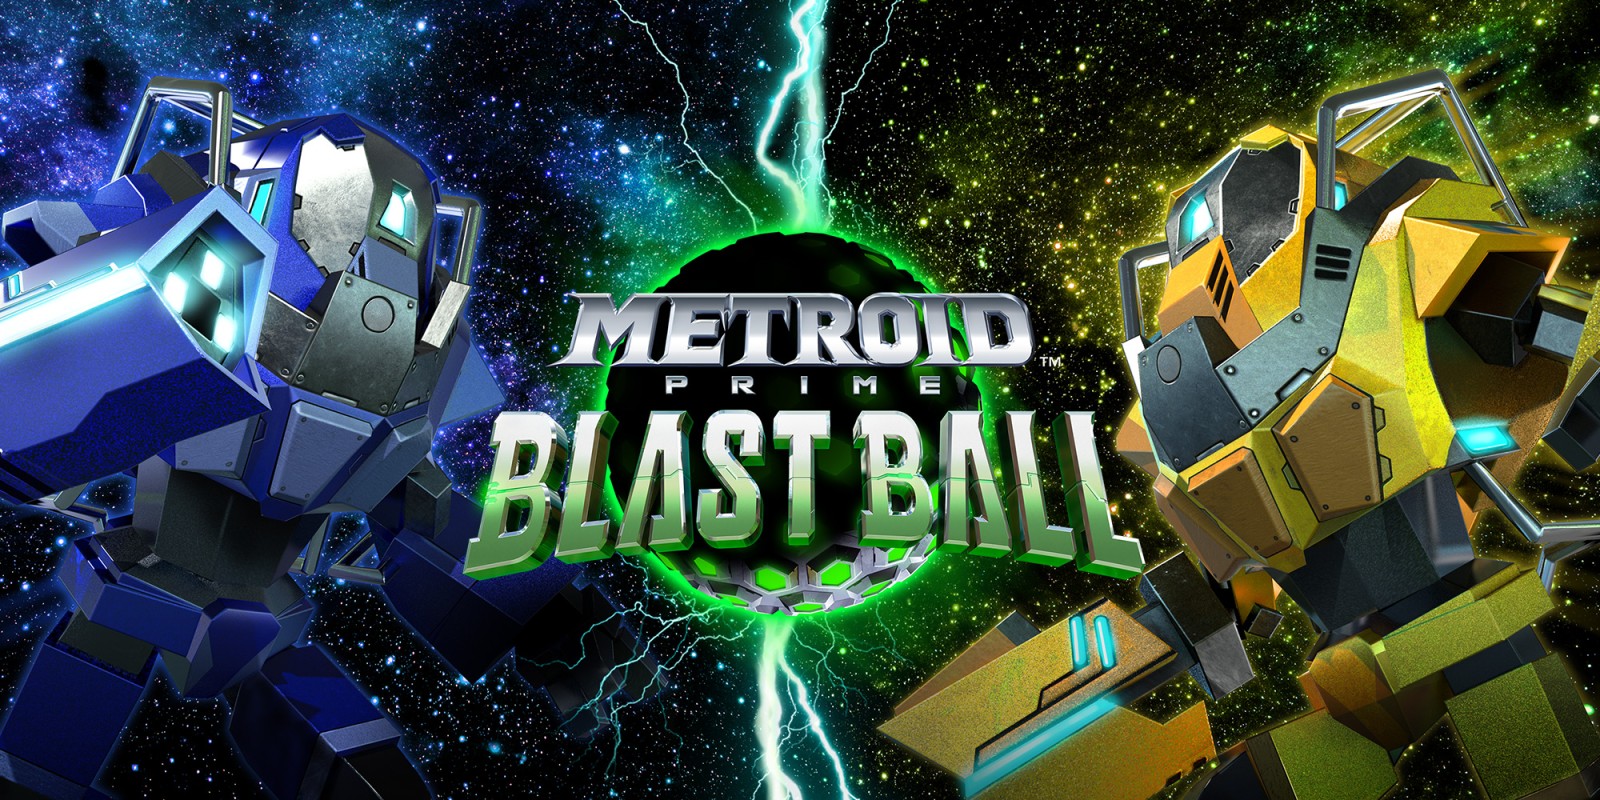 Metroid Prime: Blast Ball | Nintendo 3DS download software | Games | Nintendo